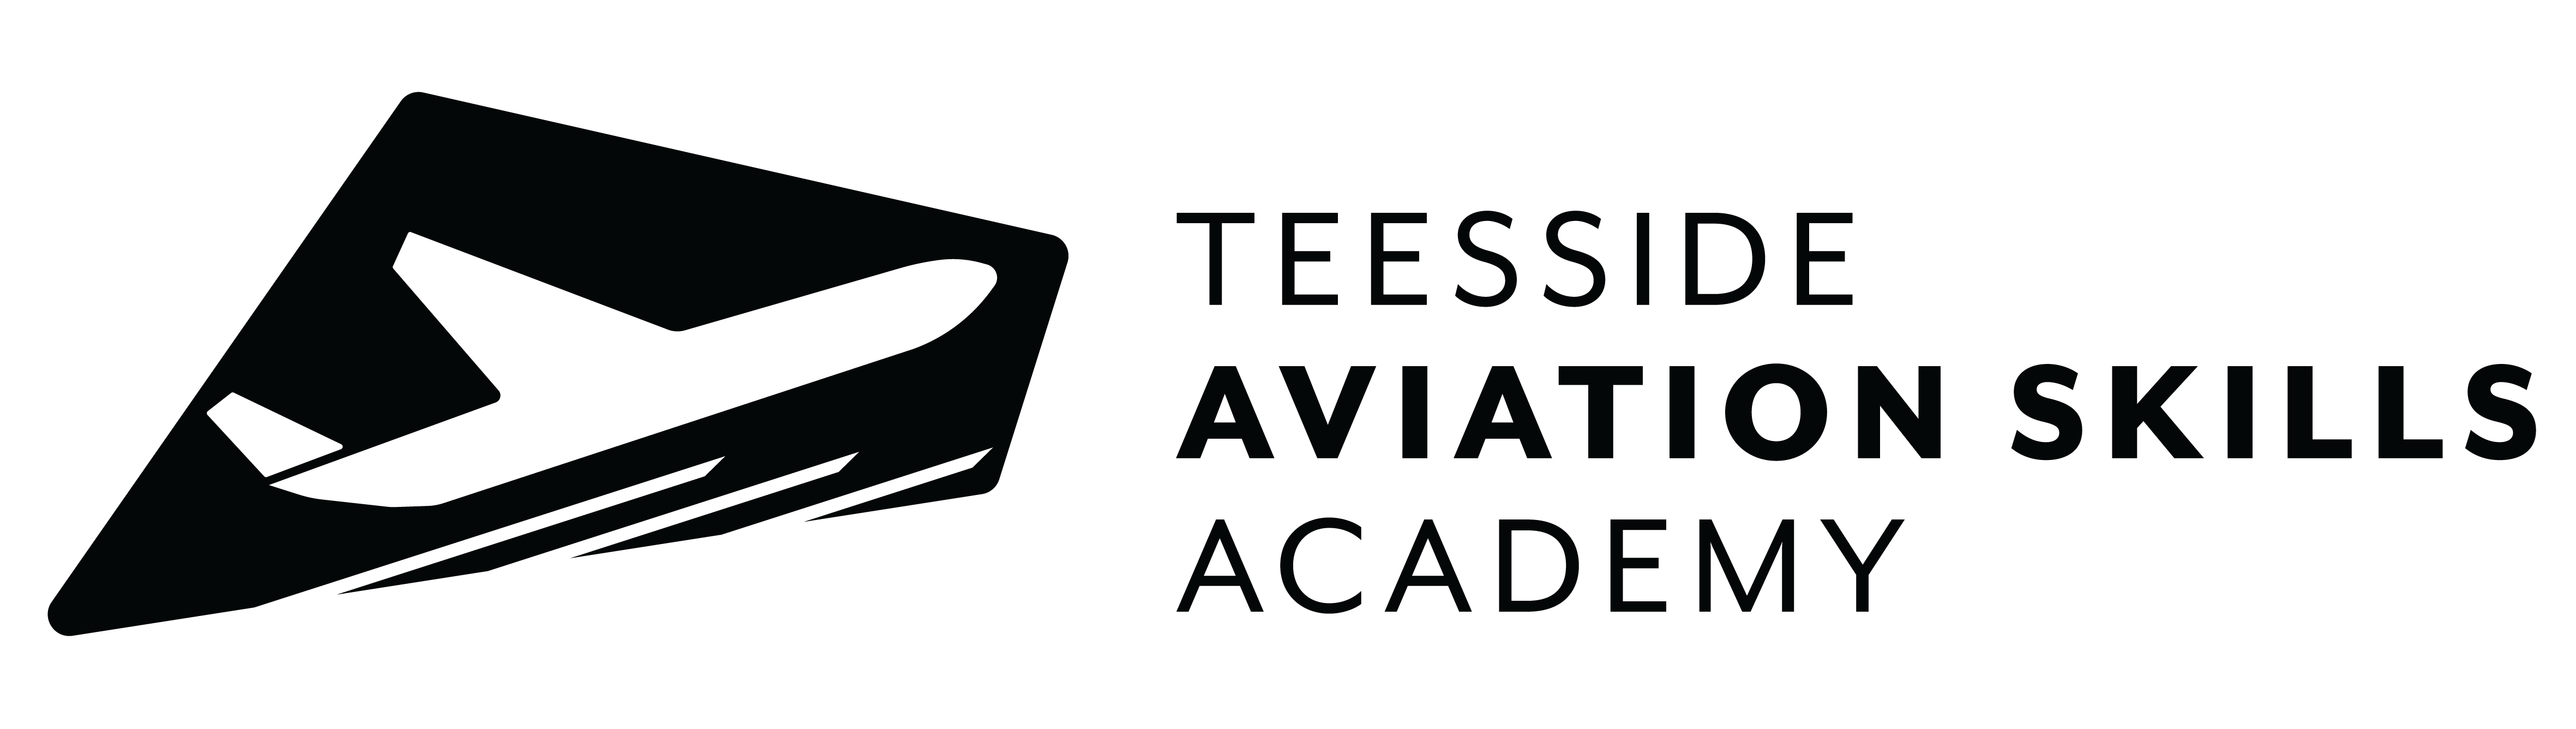 Teesside Aviation Skills Academy Logo